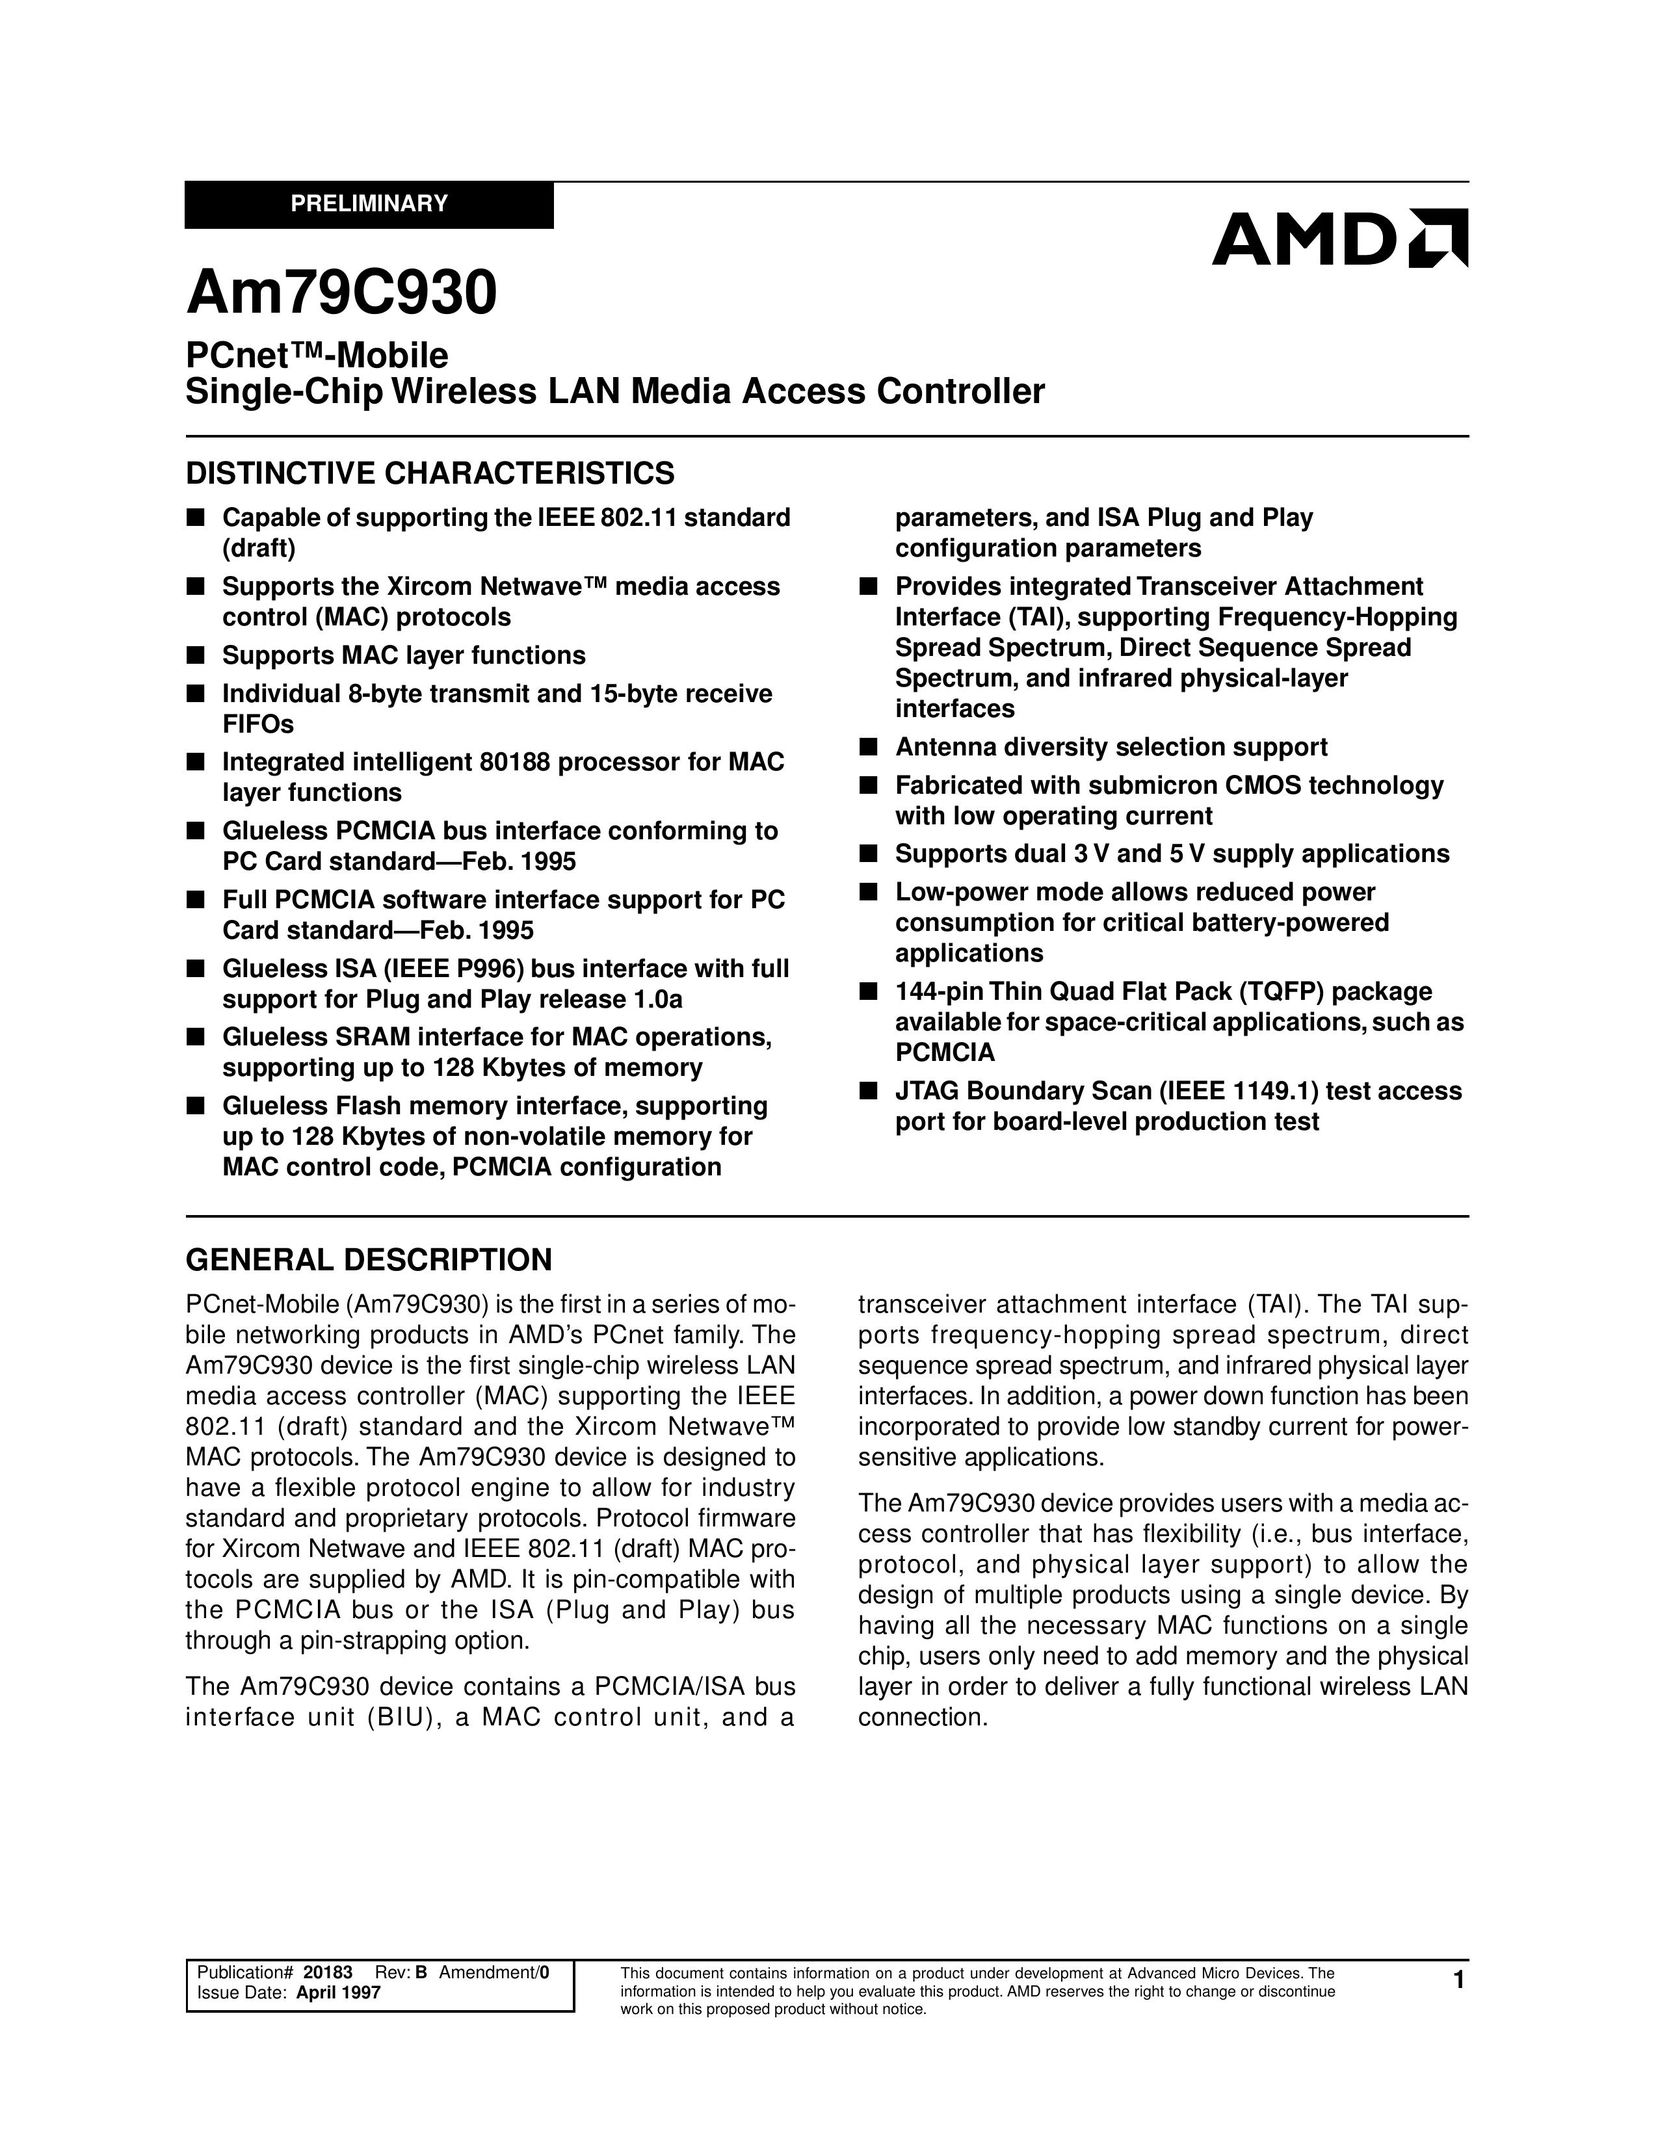 AMD Am79C930 Network Card User Manual